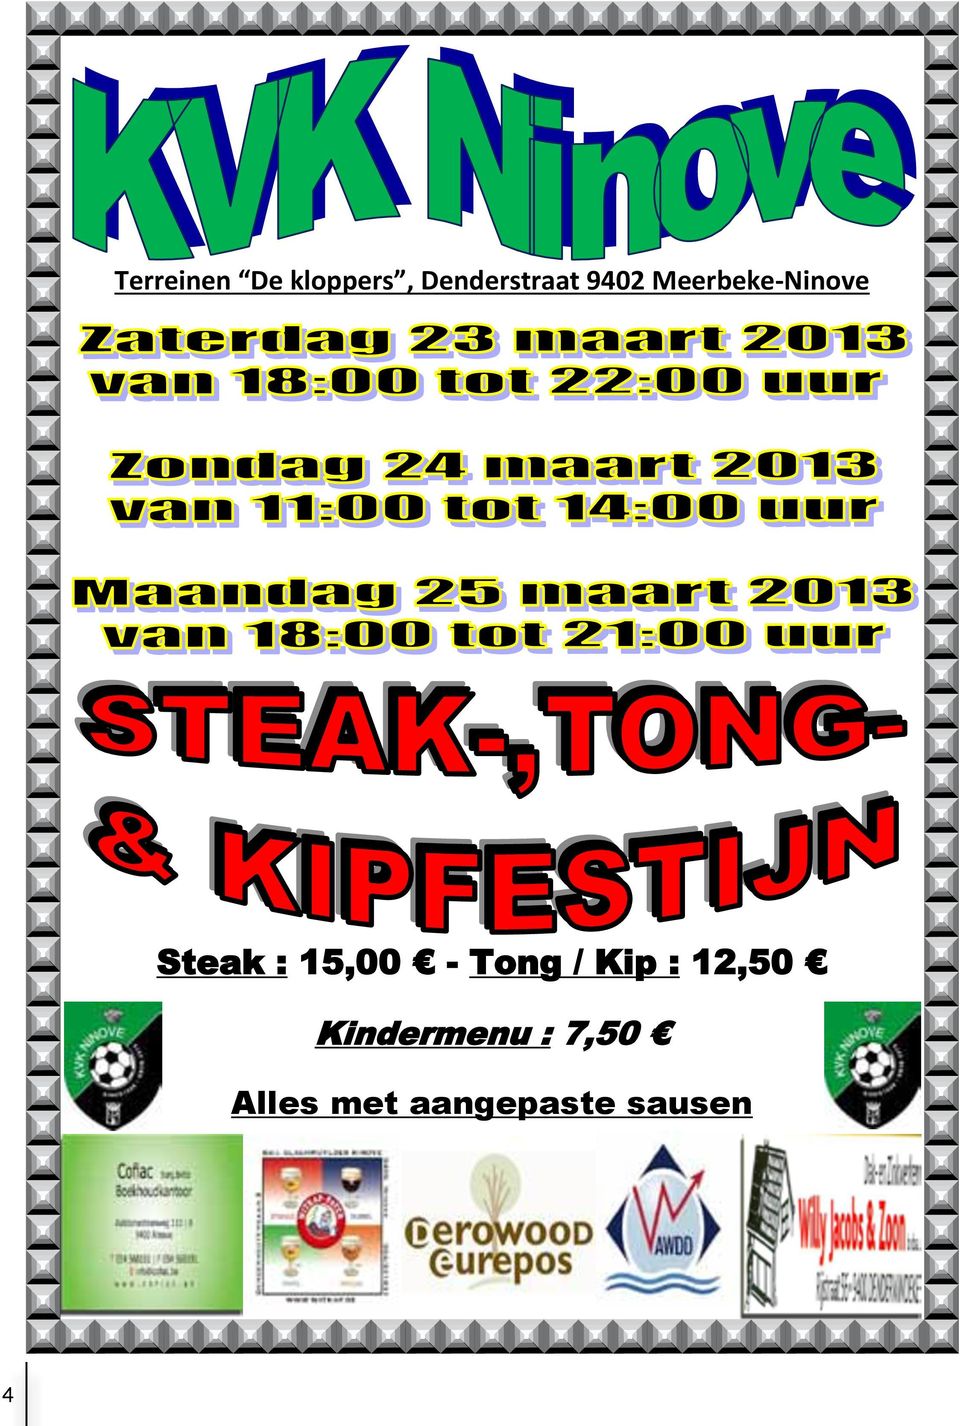 Steak : 15,00 - Tong / Kip : 12,50